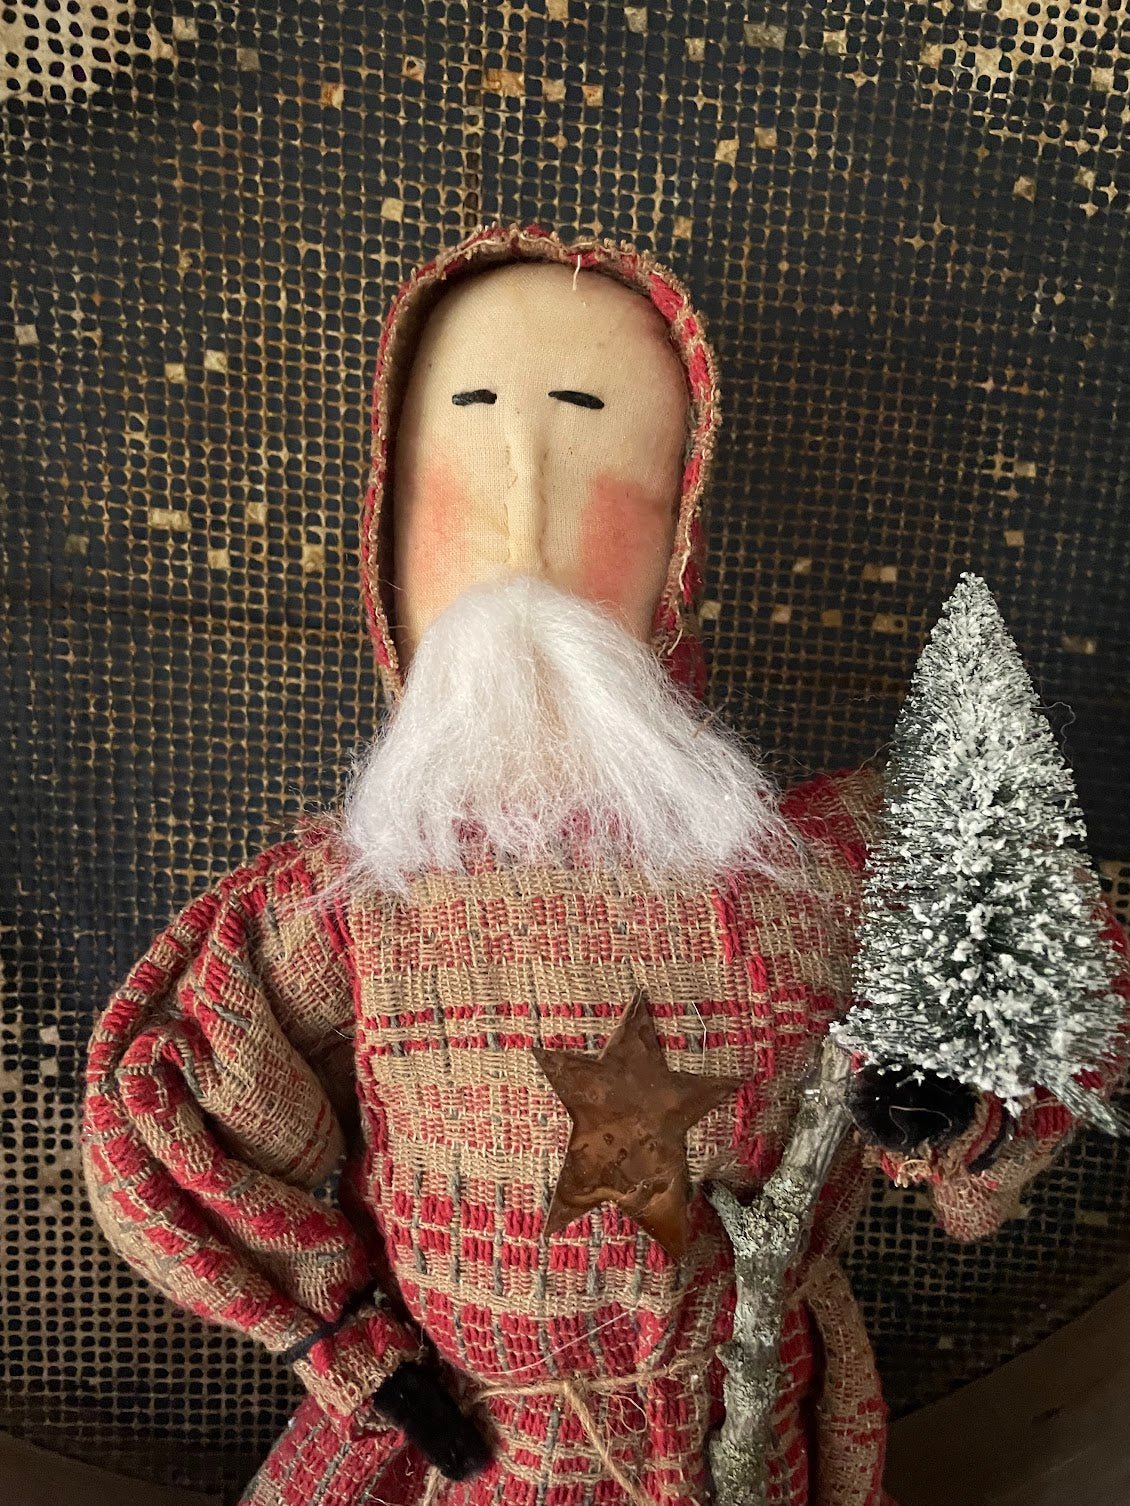 Christmas Handmade Kris Kringle Stump Santa Doll w/ Prim Red Coverlet - The Primitive Pineapple Collection